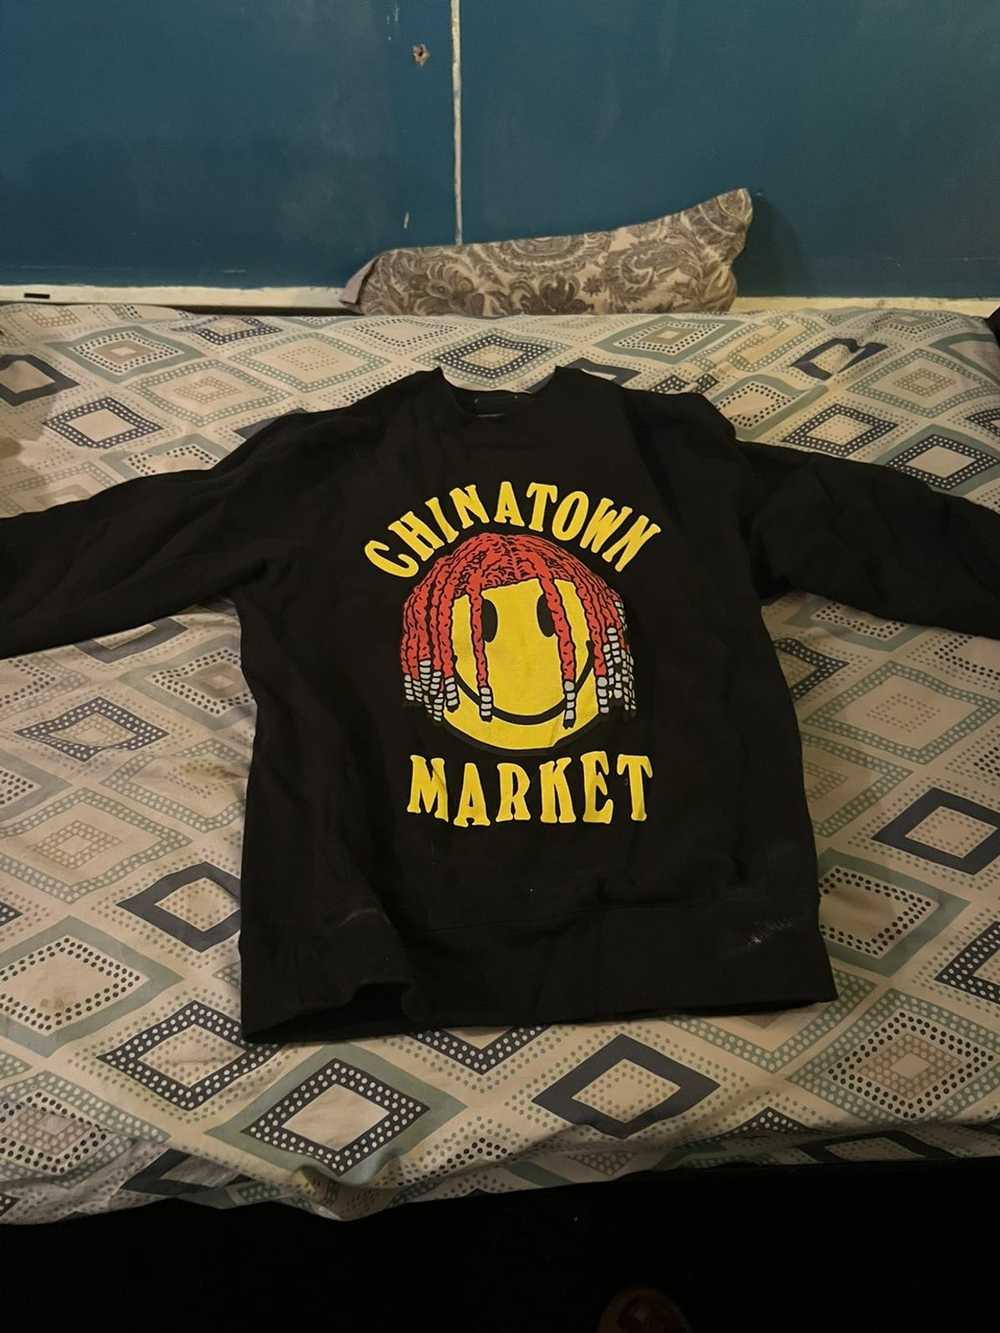 Market Chinatown market sweatshirt - image 3